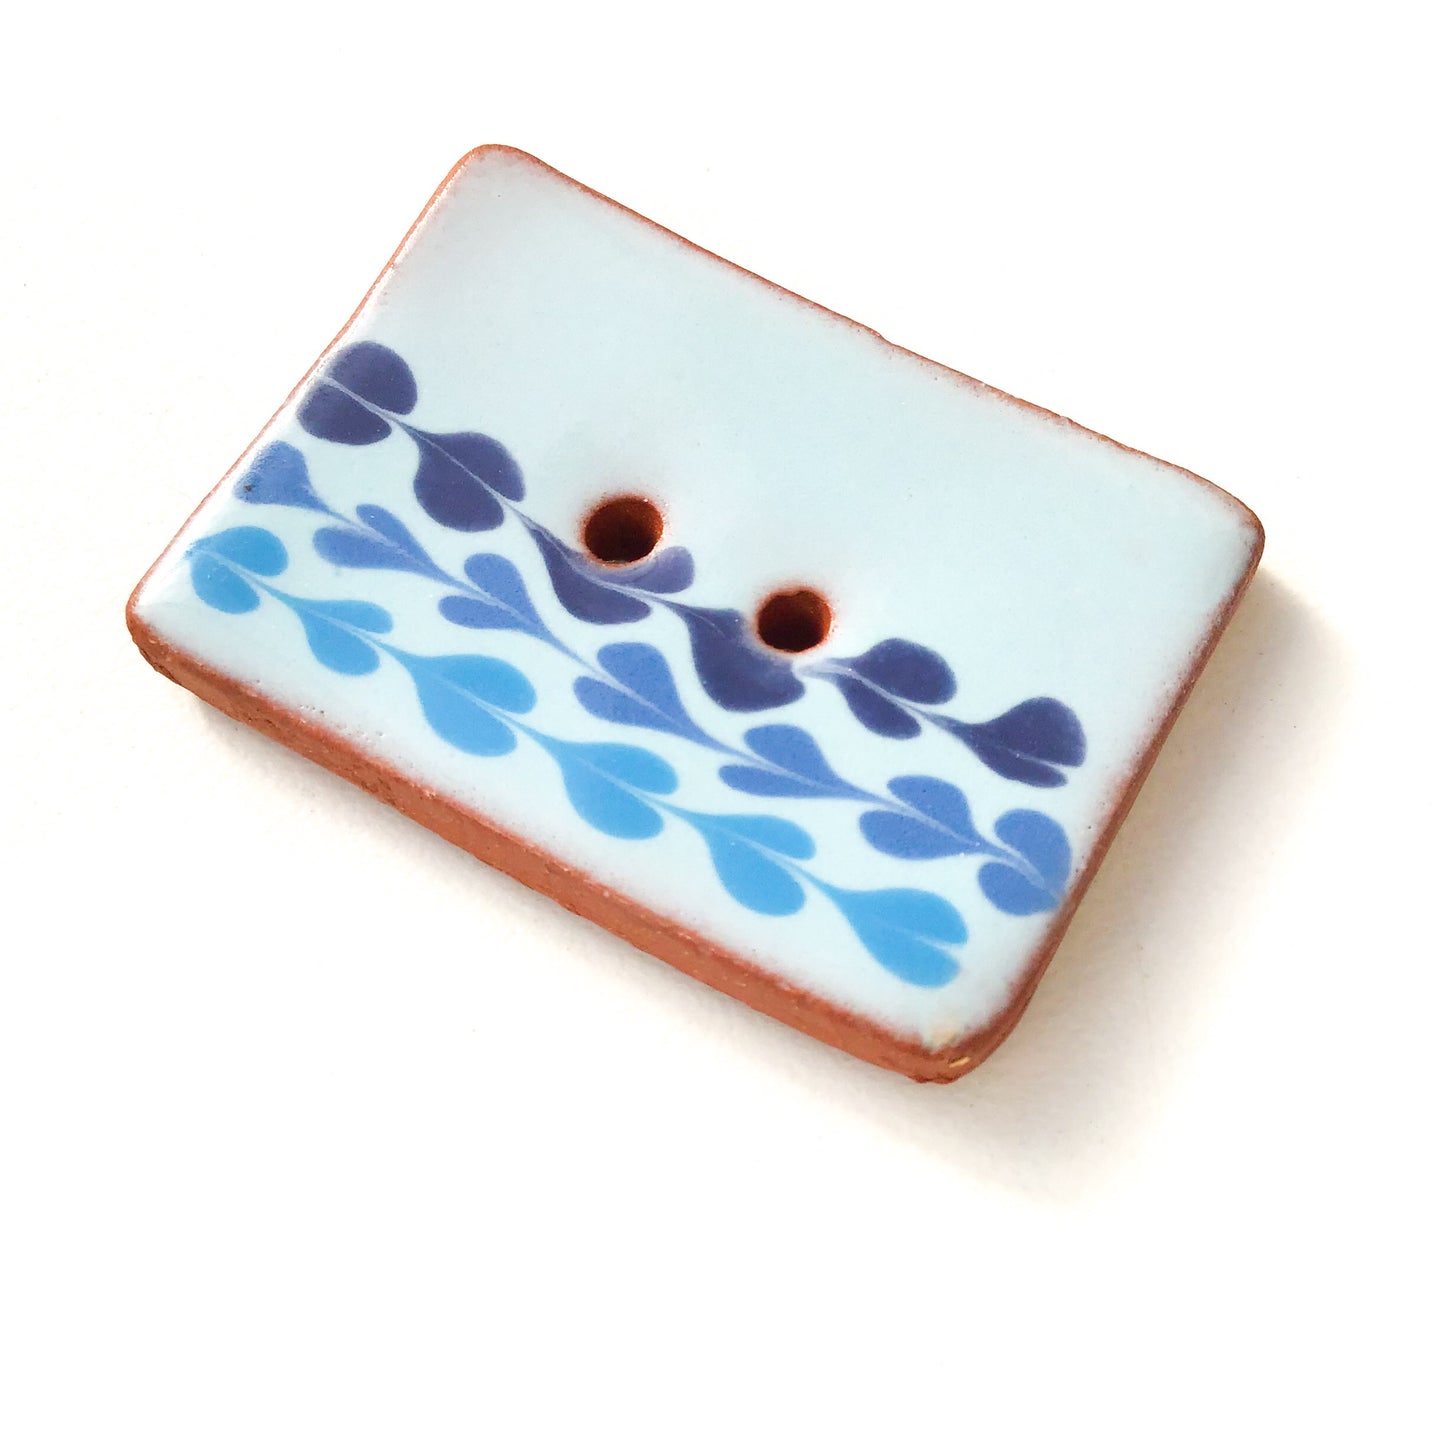 Light Blue Ceramic Button with Blue Detail - Decorative Ceramic Button - 1" x 1  1/2"